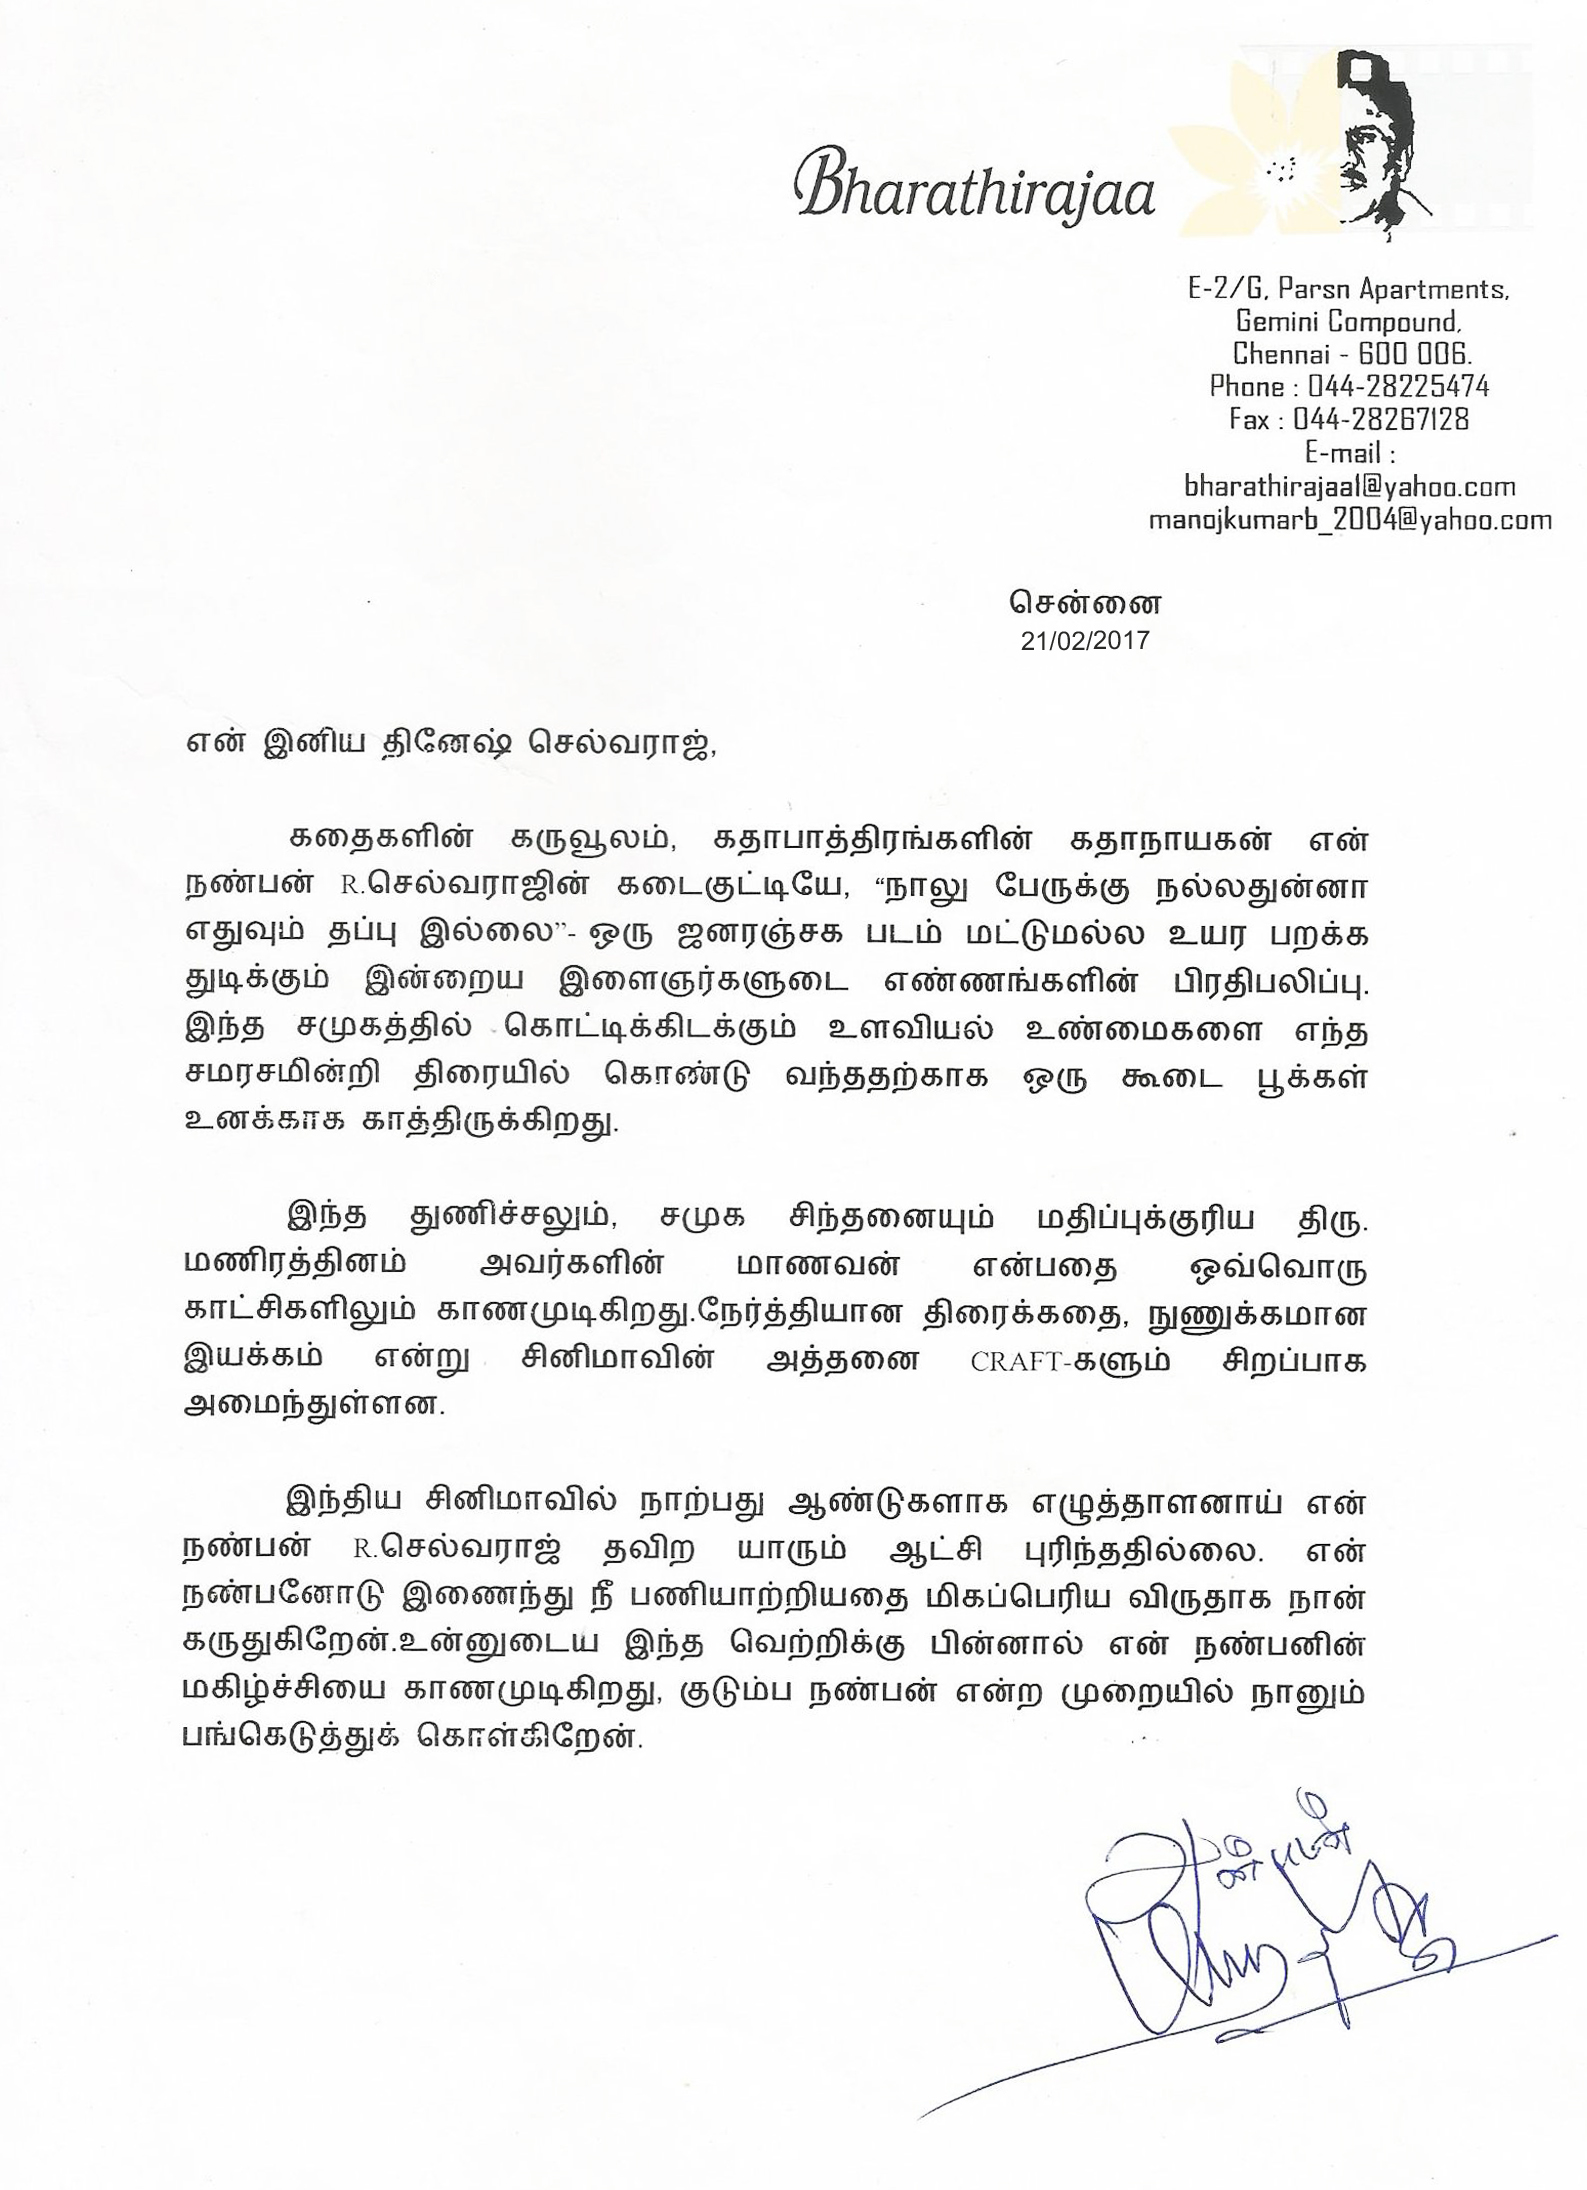 Bharathiraja's Letter